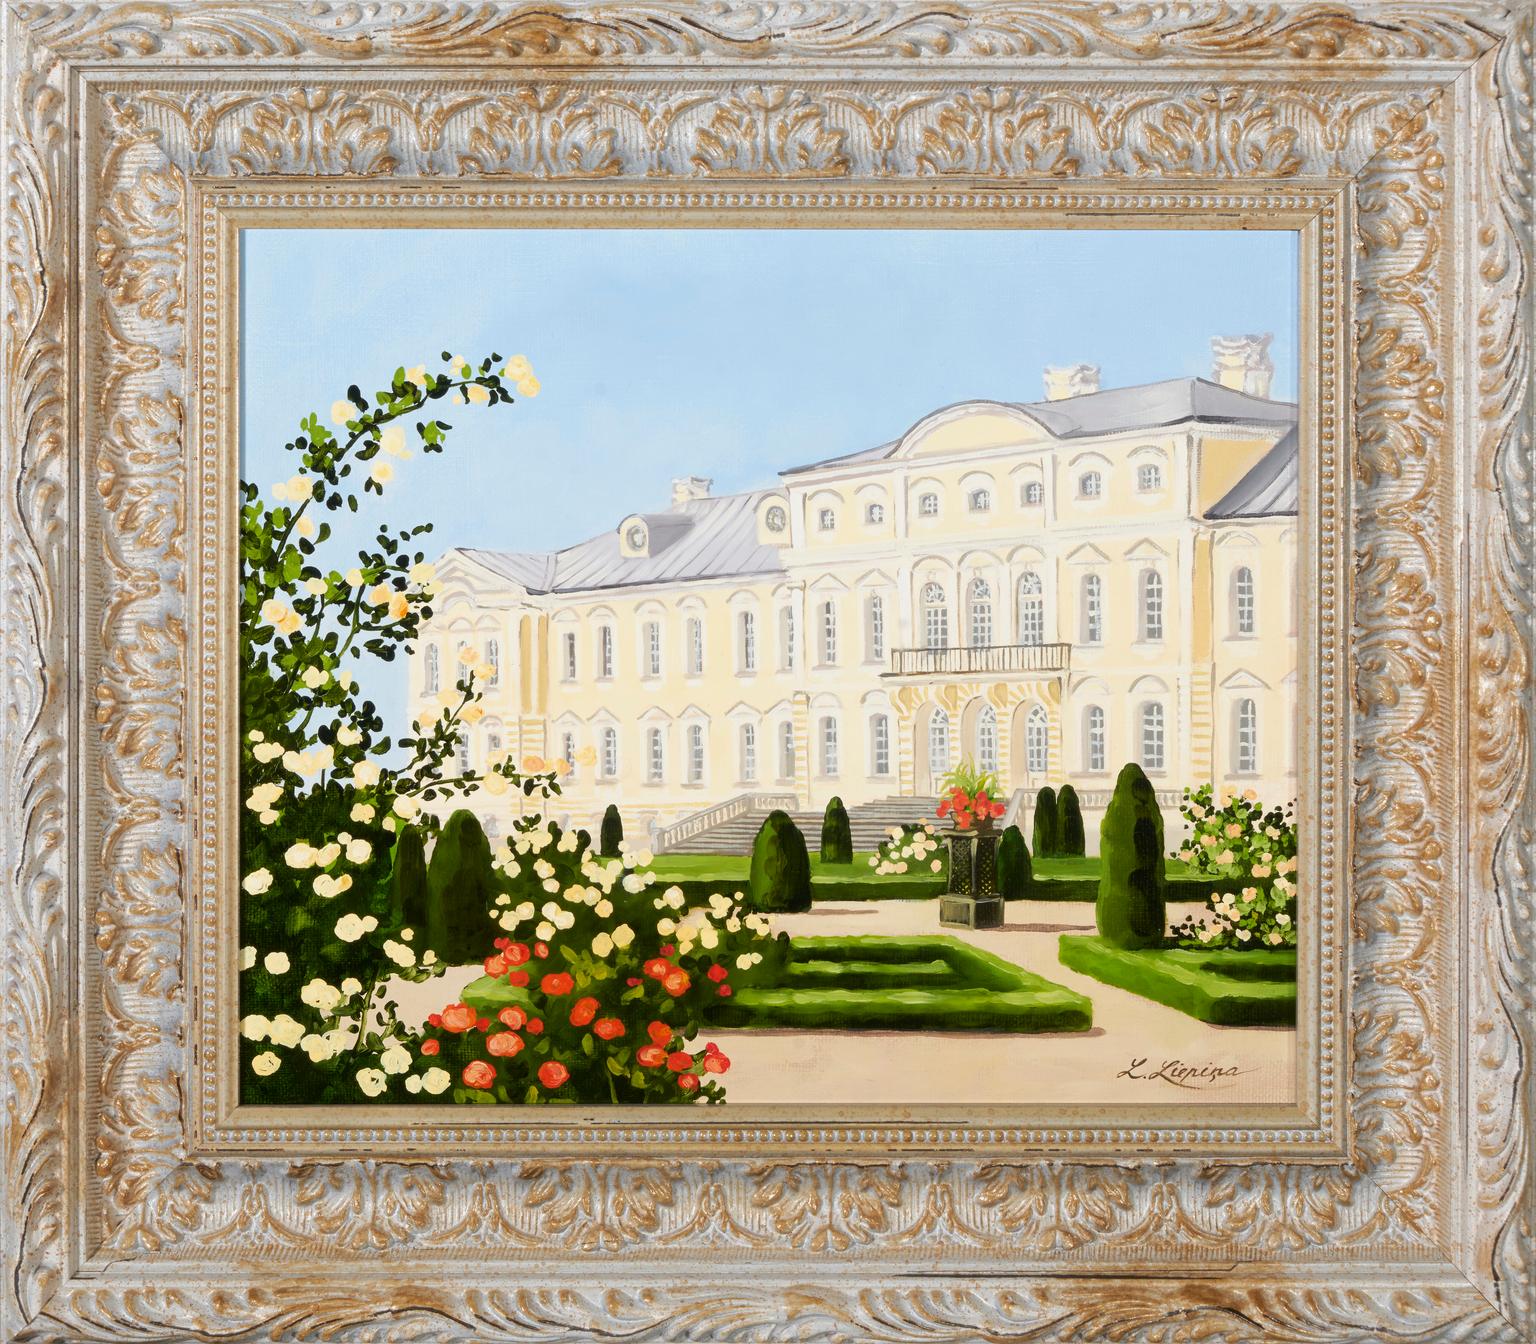 Liene Liepina  Landscape Painting - Rundale Palace, 2020. Oil on canvas, 25 x 30 cm 